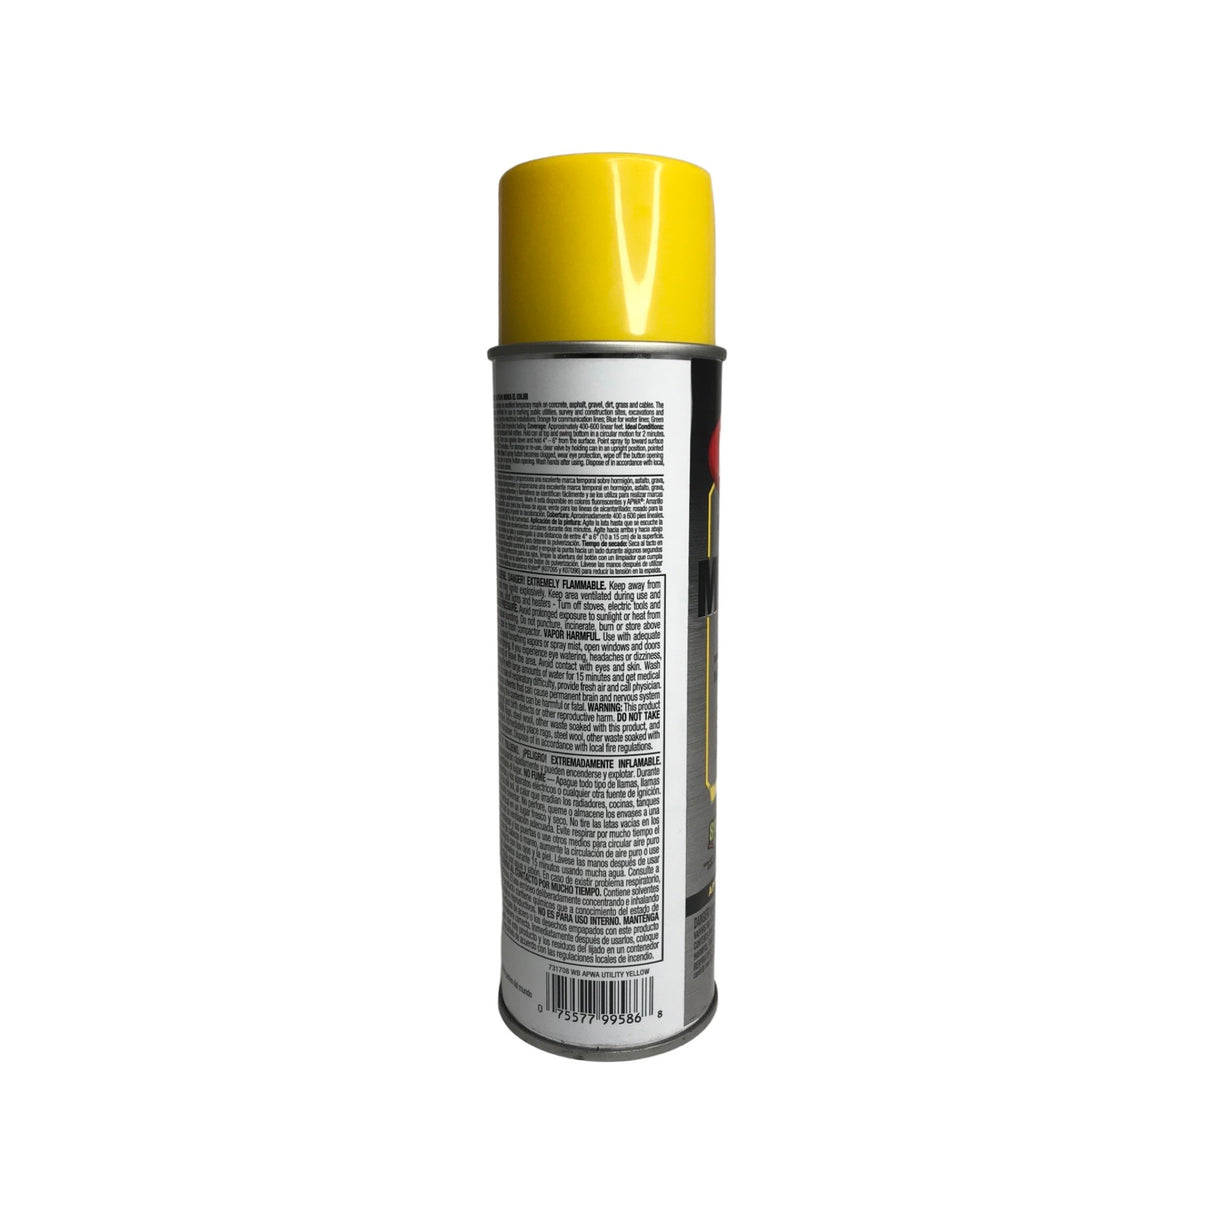 Krylon 731708 - 6 PACK Mark-It WB Inverted Marking Paint - APWA Utility Yellow